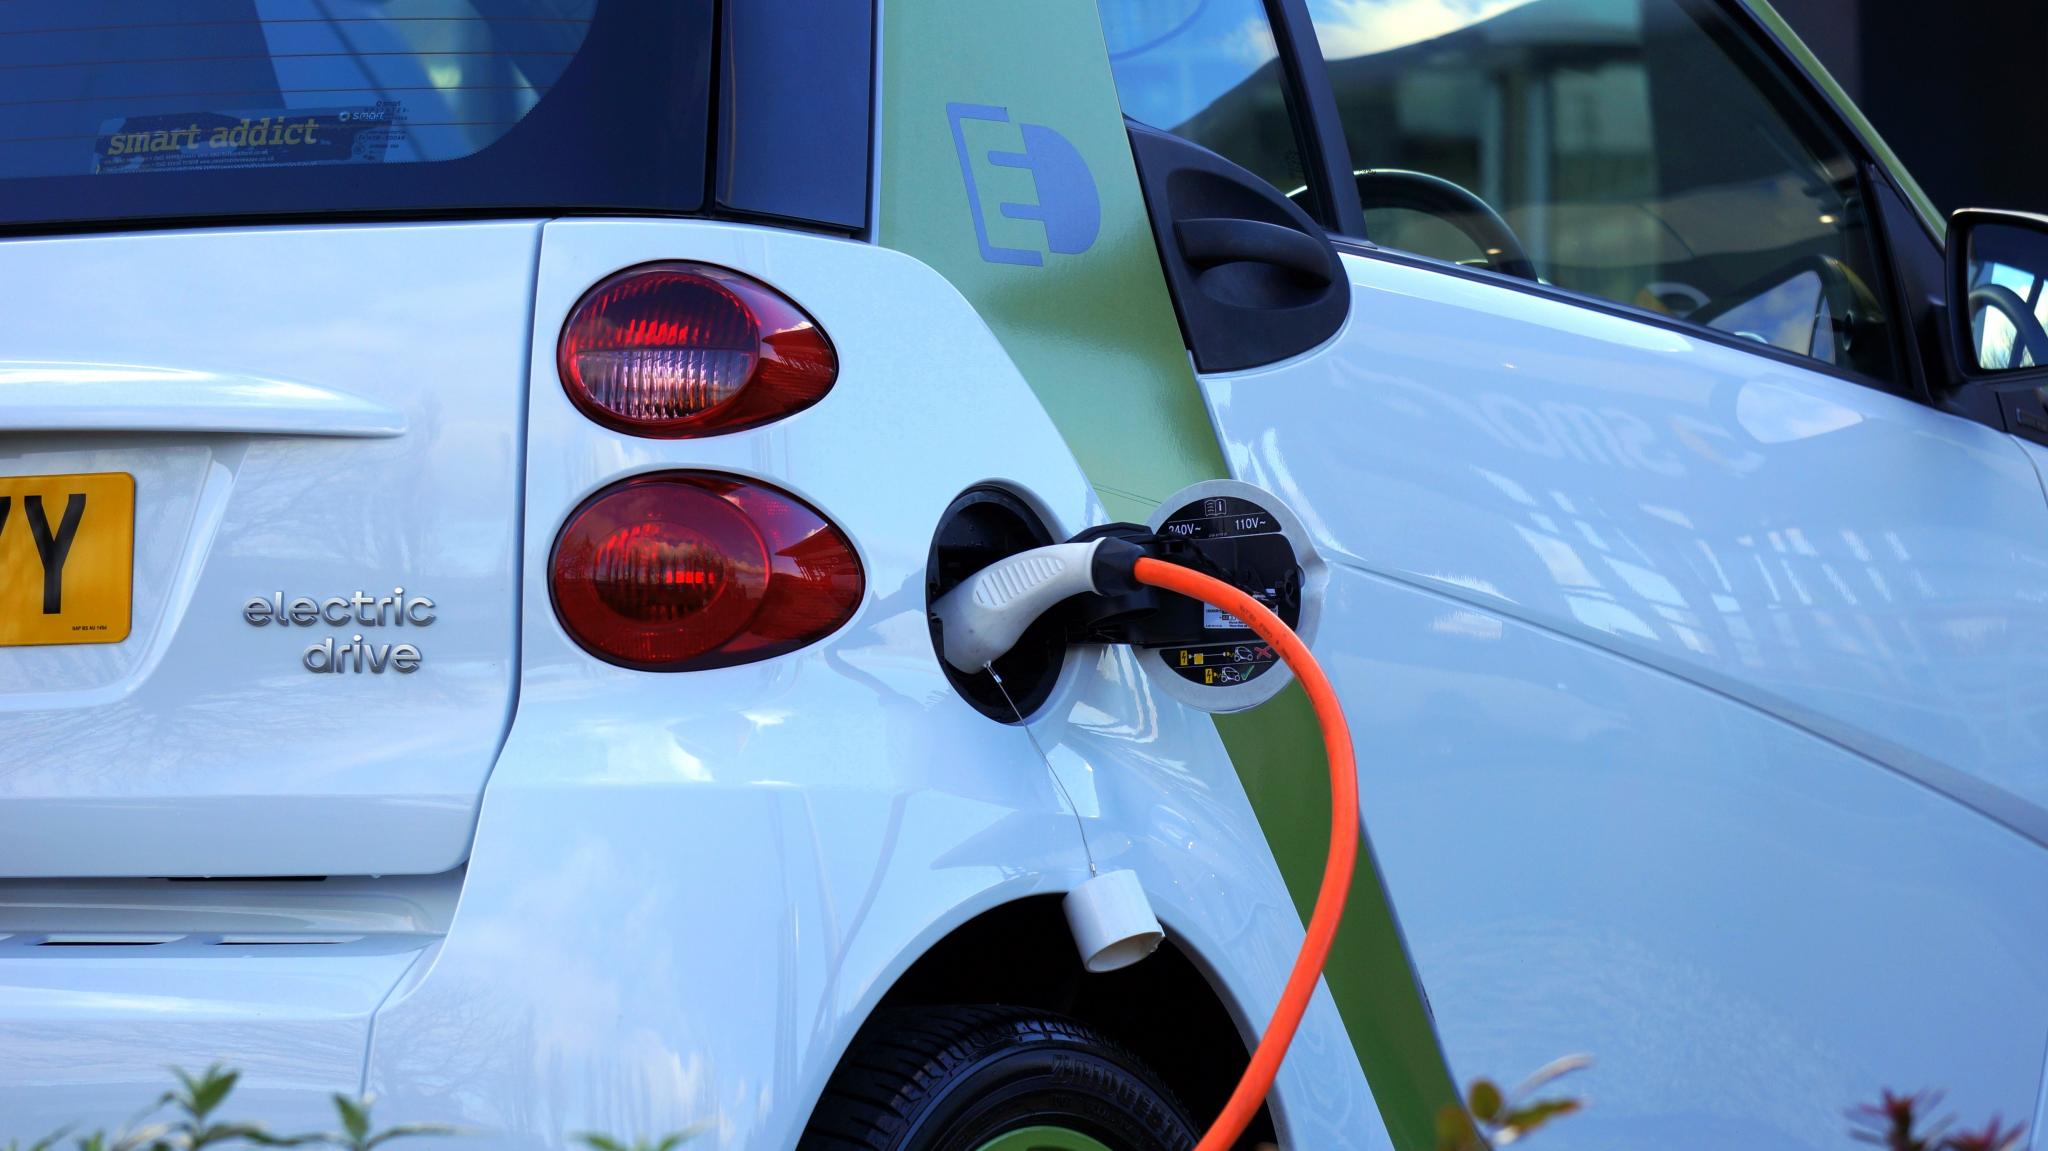 Deloitte: Electric vehicle market growing, but financial benefits reducing